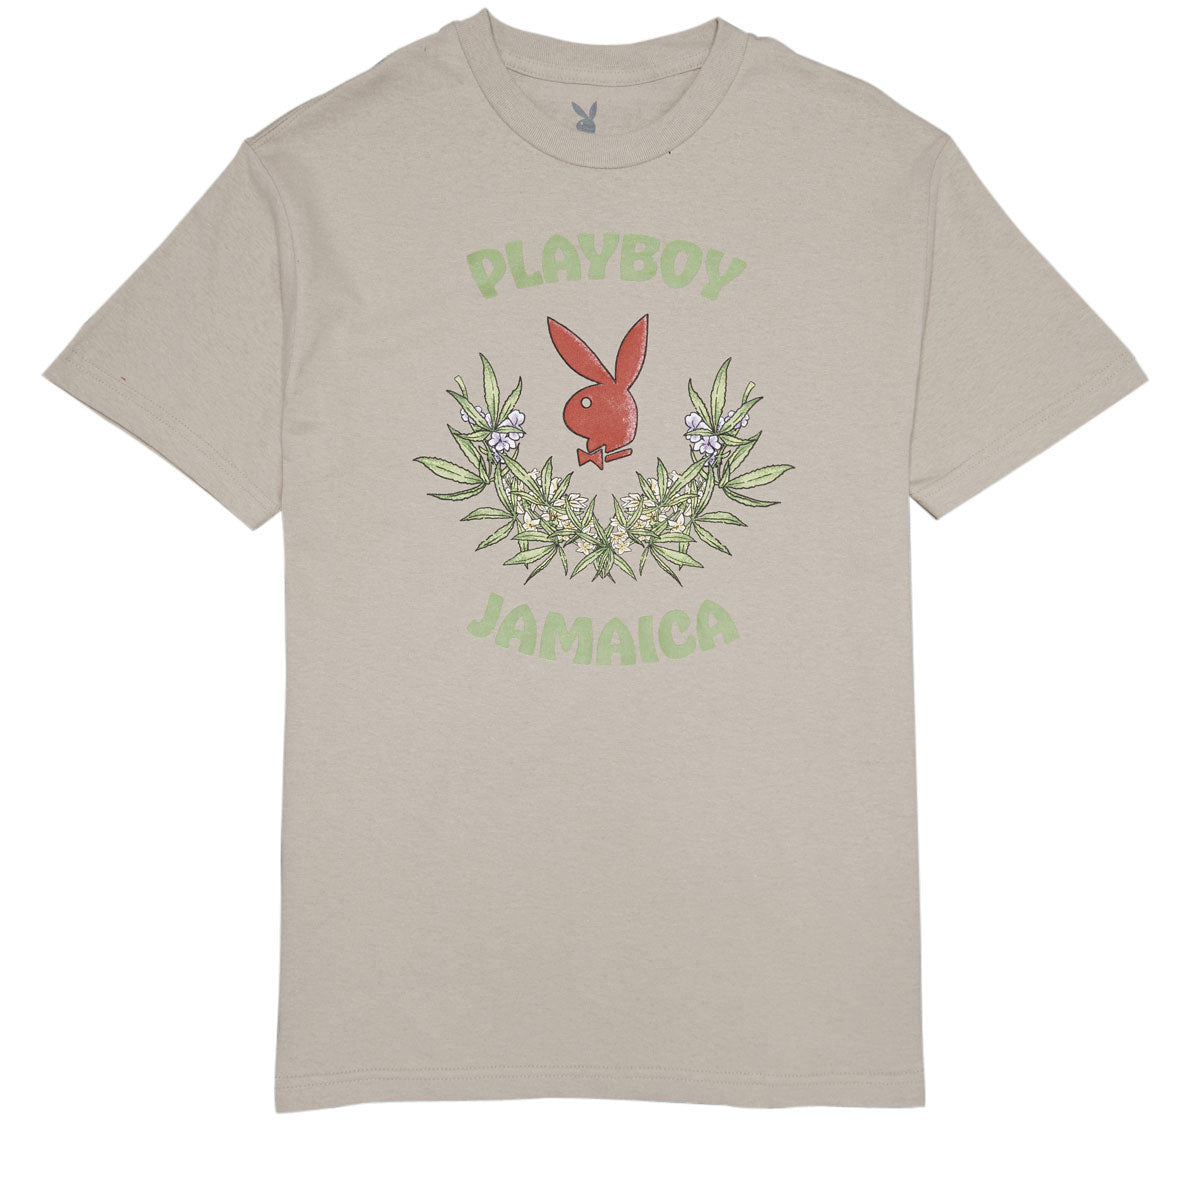 Color Bars x Playboy Jamaica Core Logo T-Shirt - Sand image 1